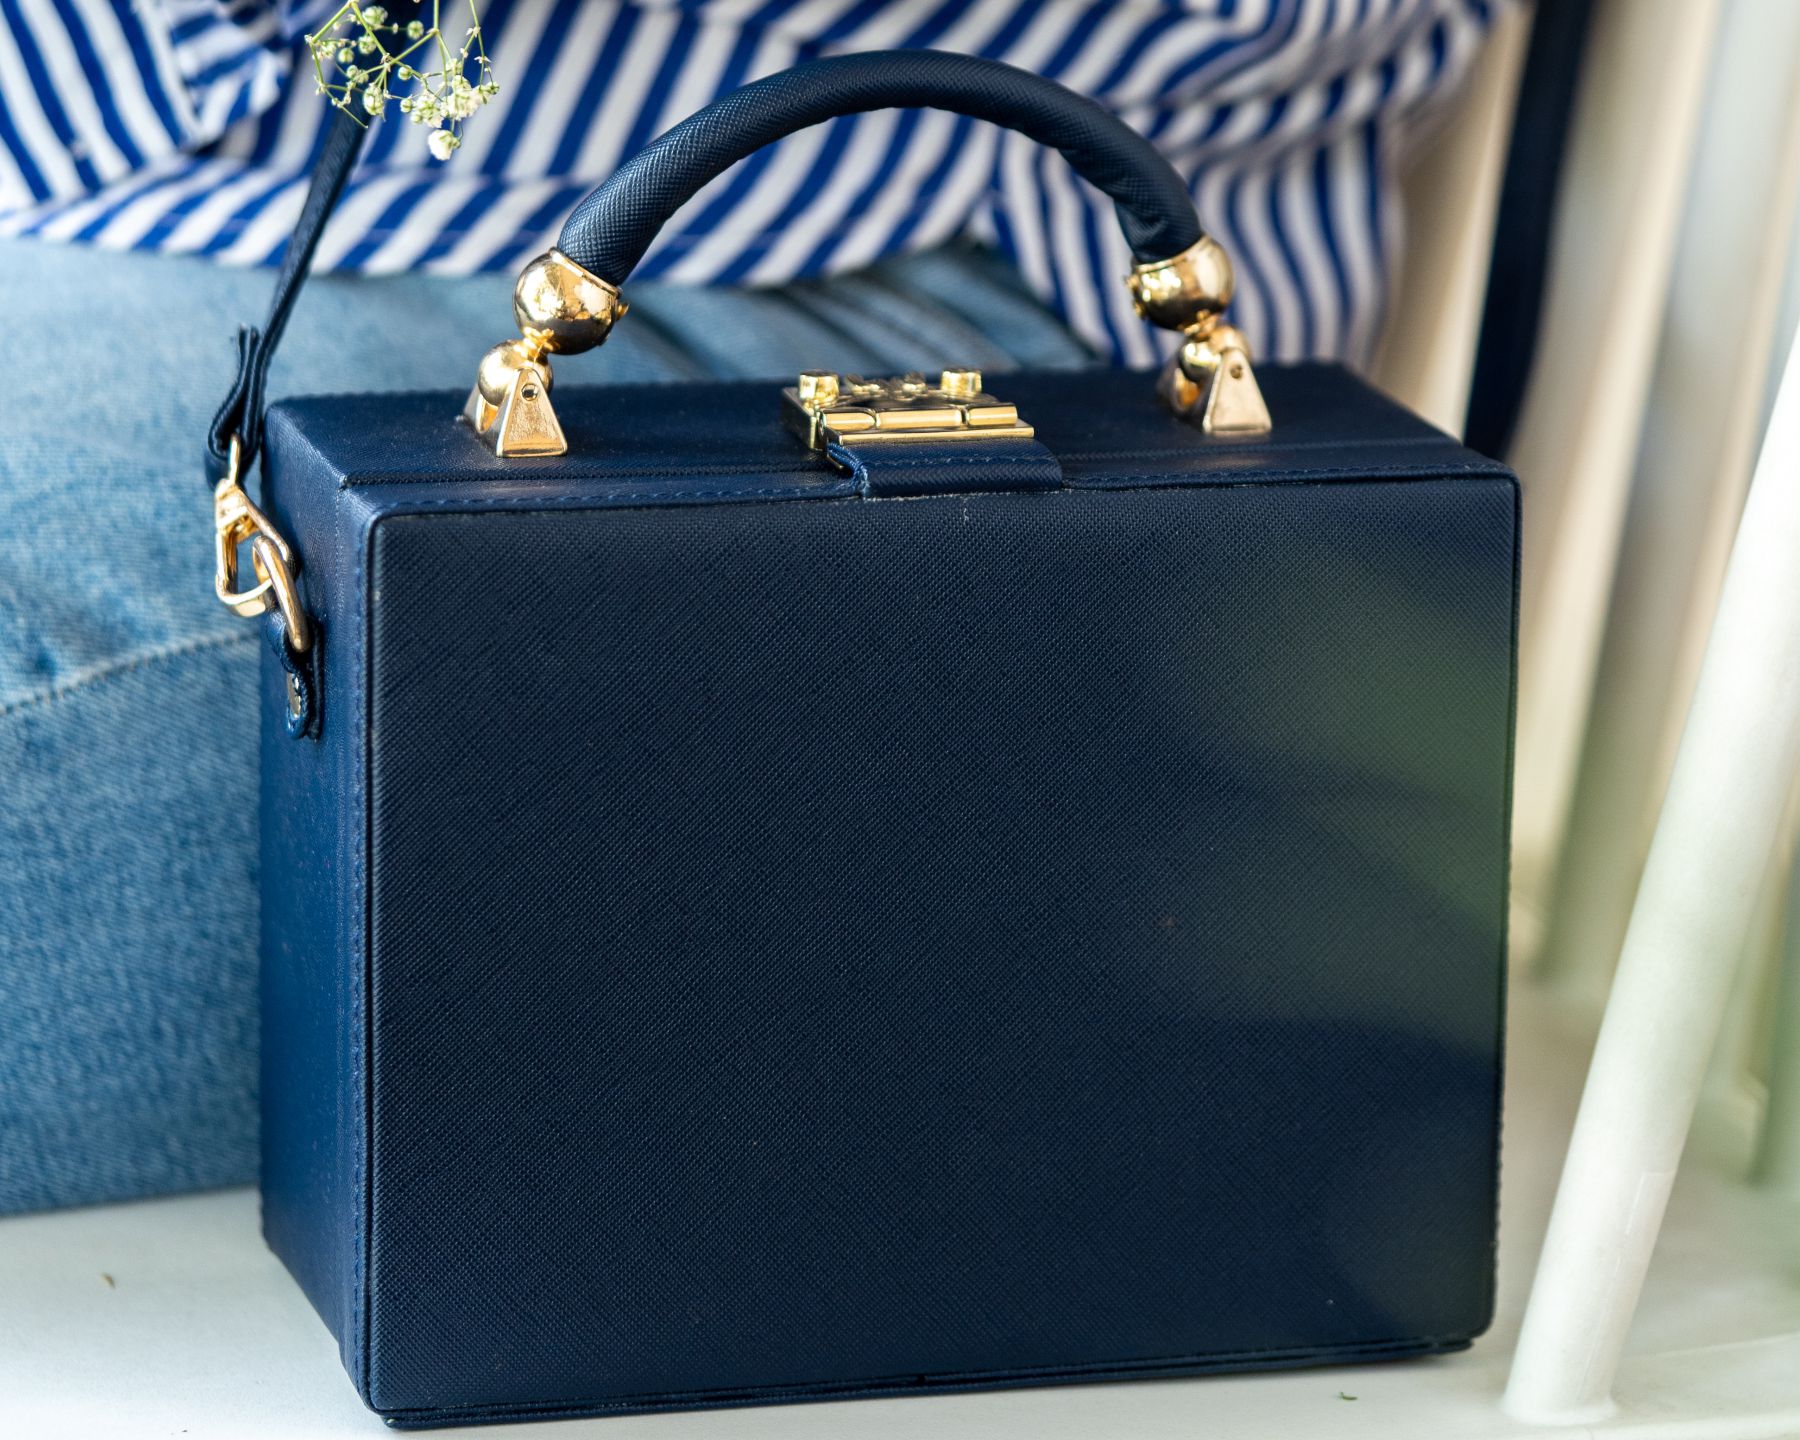 Mermaid Lost Treasures Box Purse Handbag Cosmetic Trunk Bag | eBay